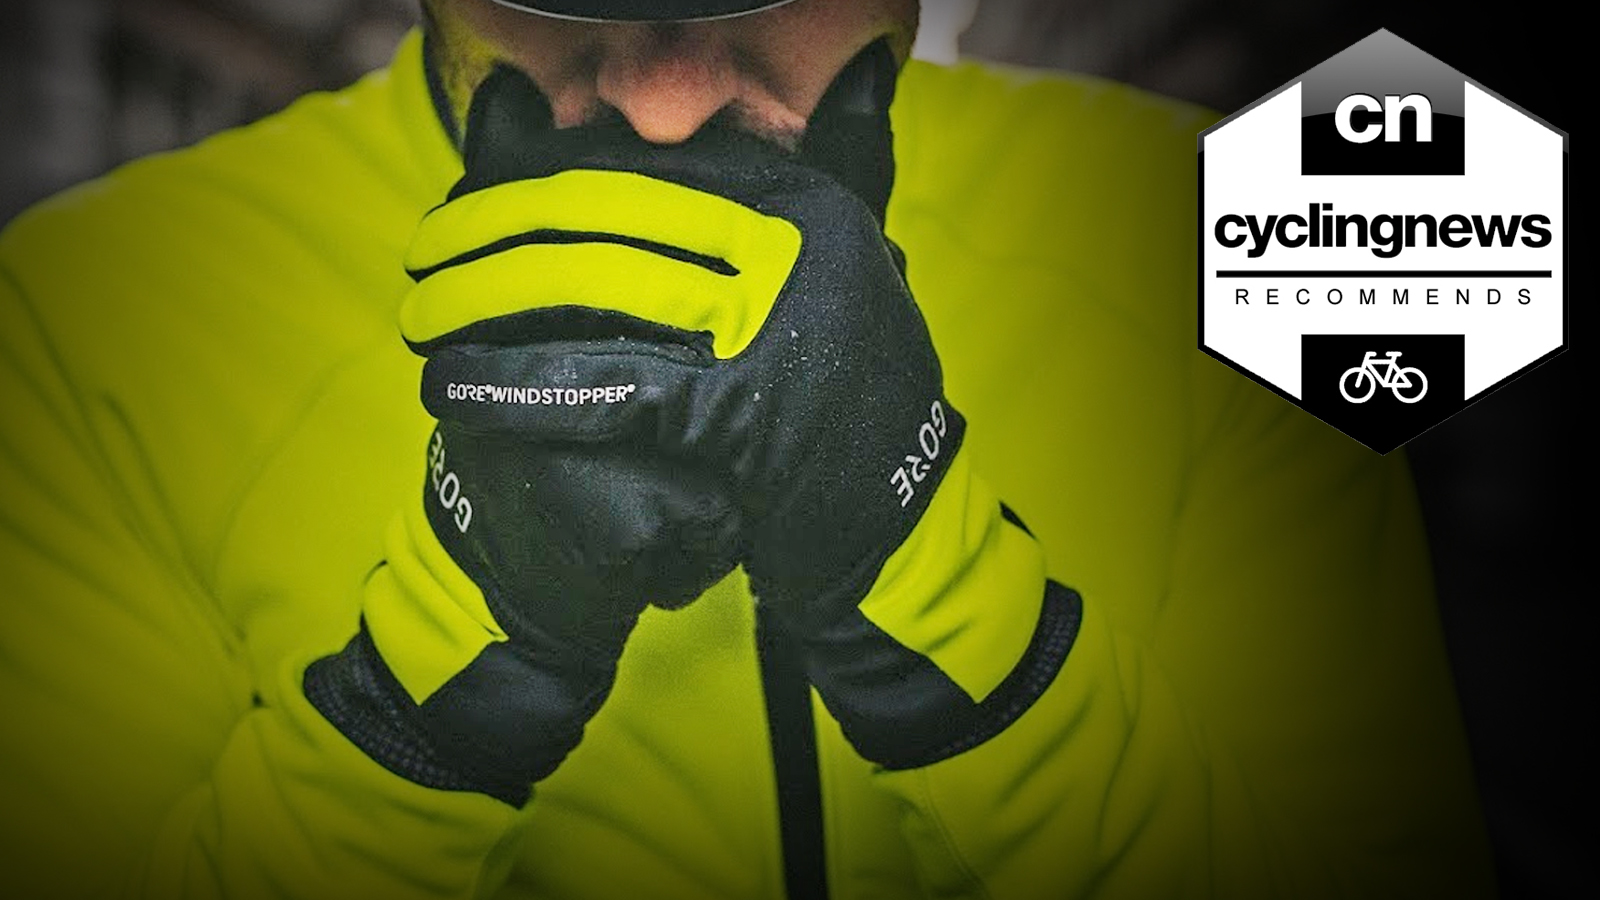 Winter Gloves Warm Running Gloves Cycling Windproof Gloves Women Men Climbing Driving Sports Gloves for Winter Fall LONTG 